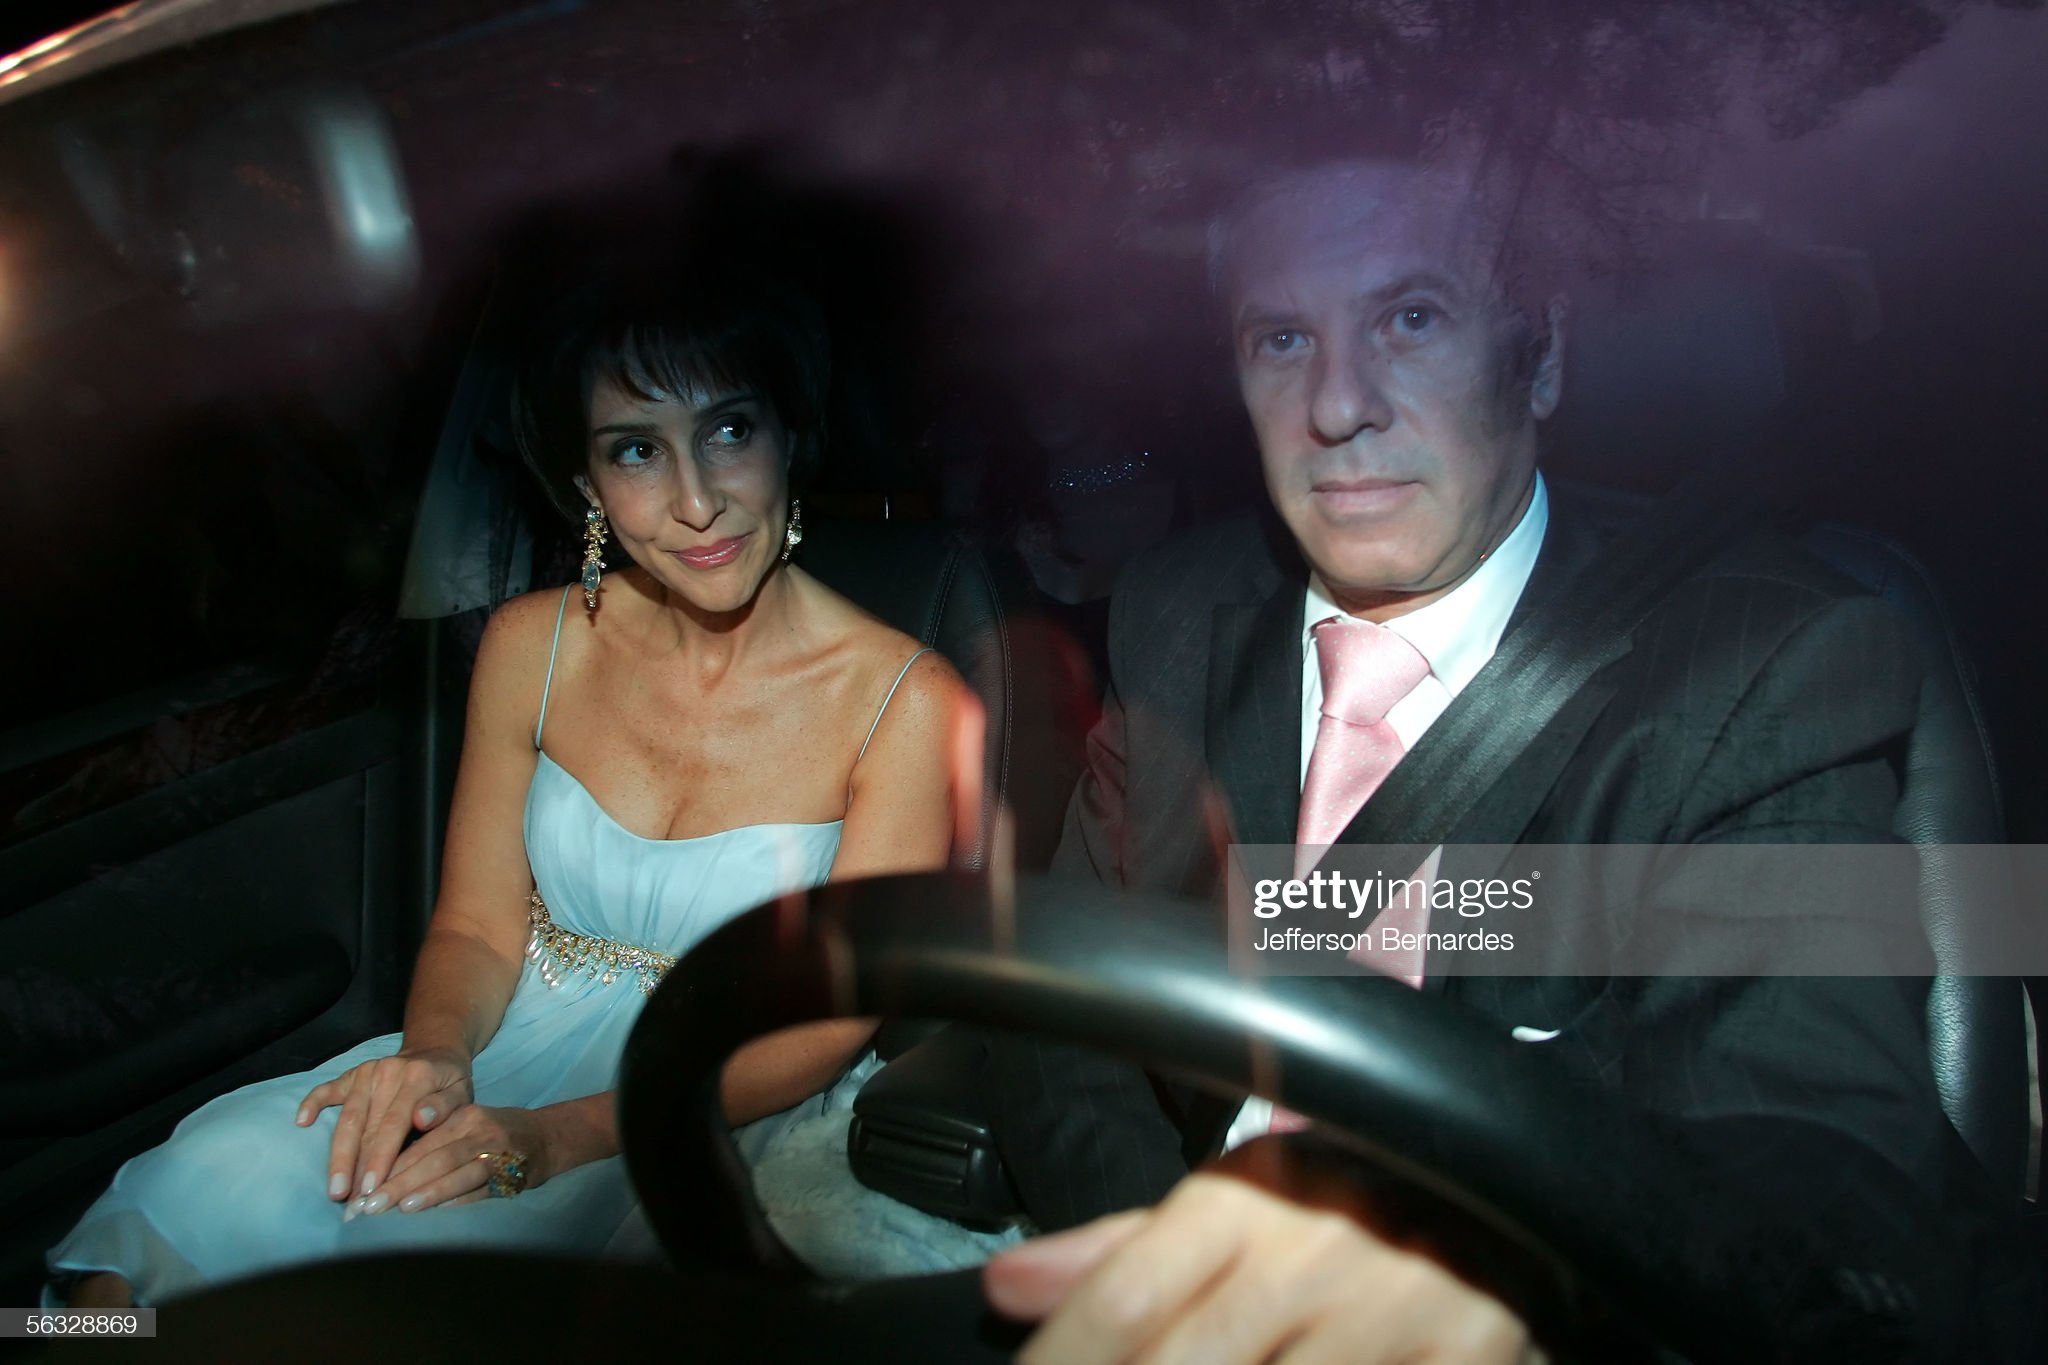 Viviane Senna arrives for the wedding of Greek heiress Athina Onassis Roussel to Brazilian equestrian Alvaro Affonso de Miranda Neto.